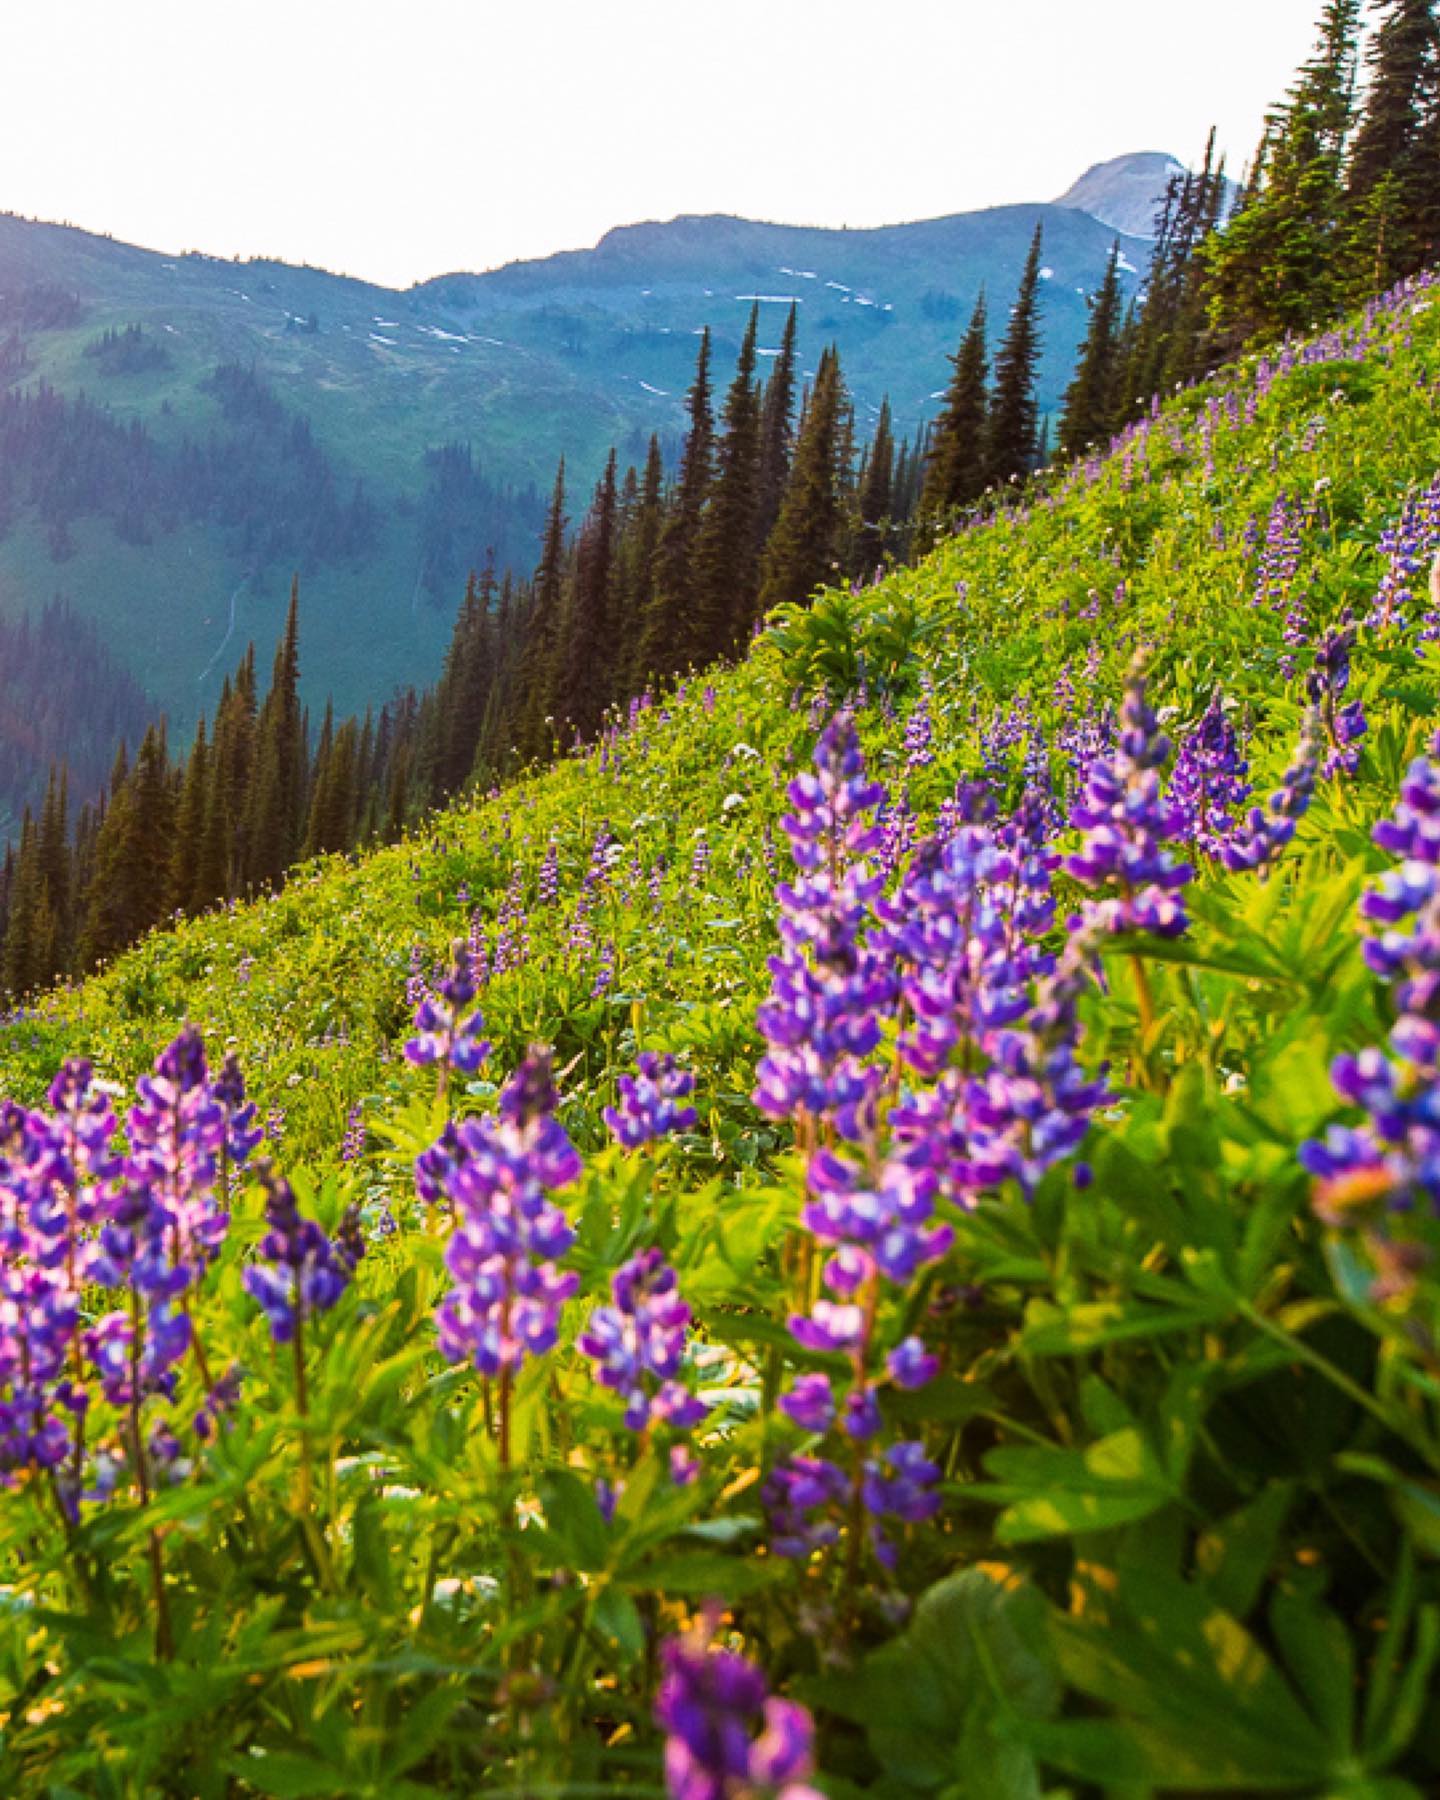 photo by RYAN CREARY caption reads: High alpine color spectrum 🌸 / Revelstoke, BC